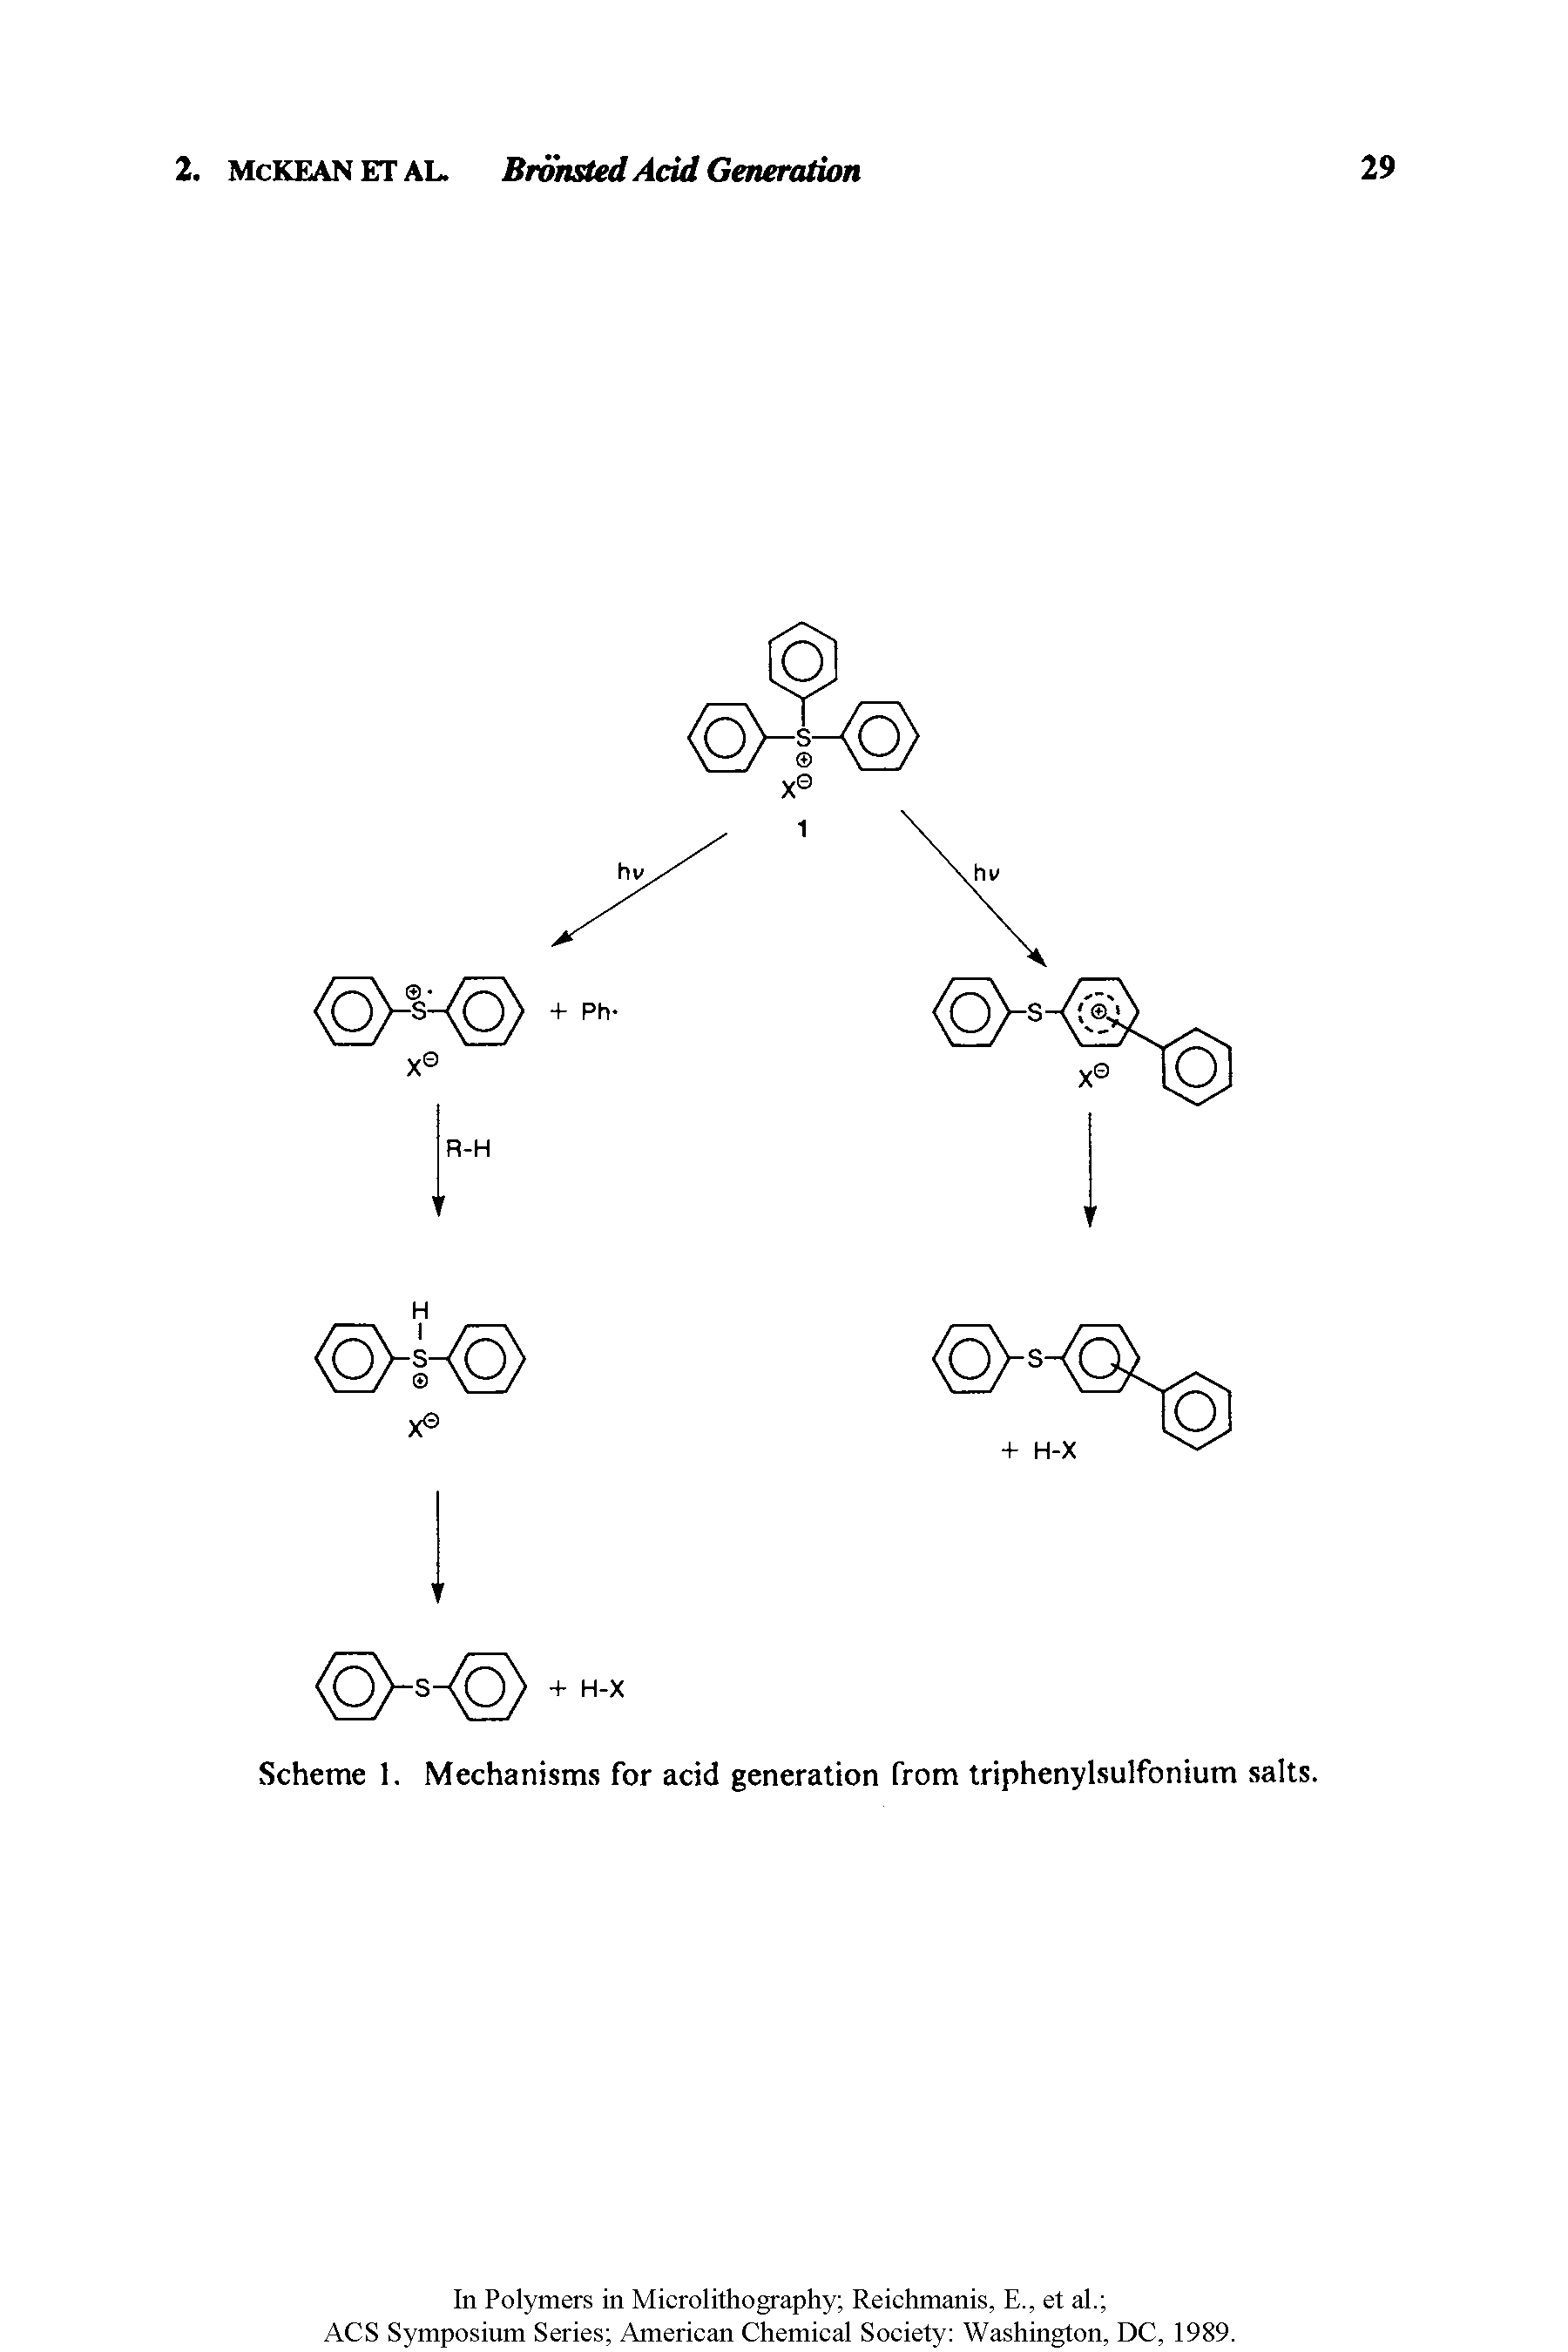 Scheme 1. Mechanisms for acid generation from triphenylsulfonium salts.